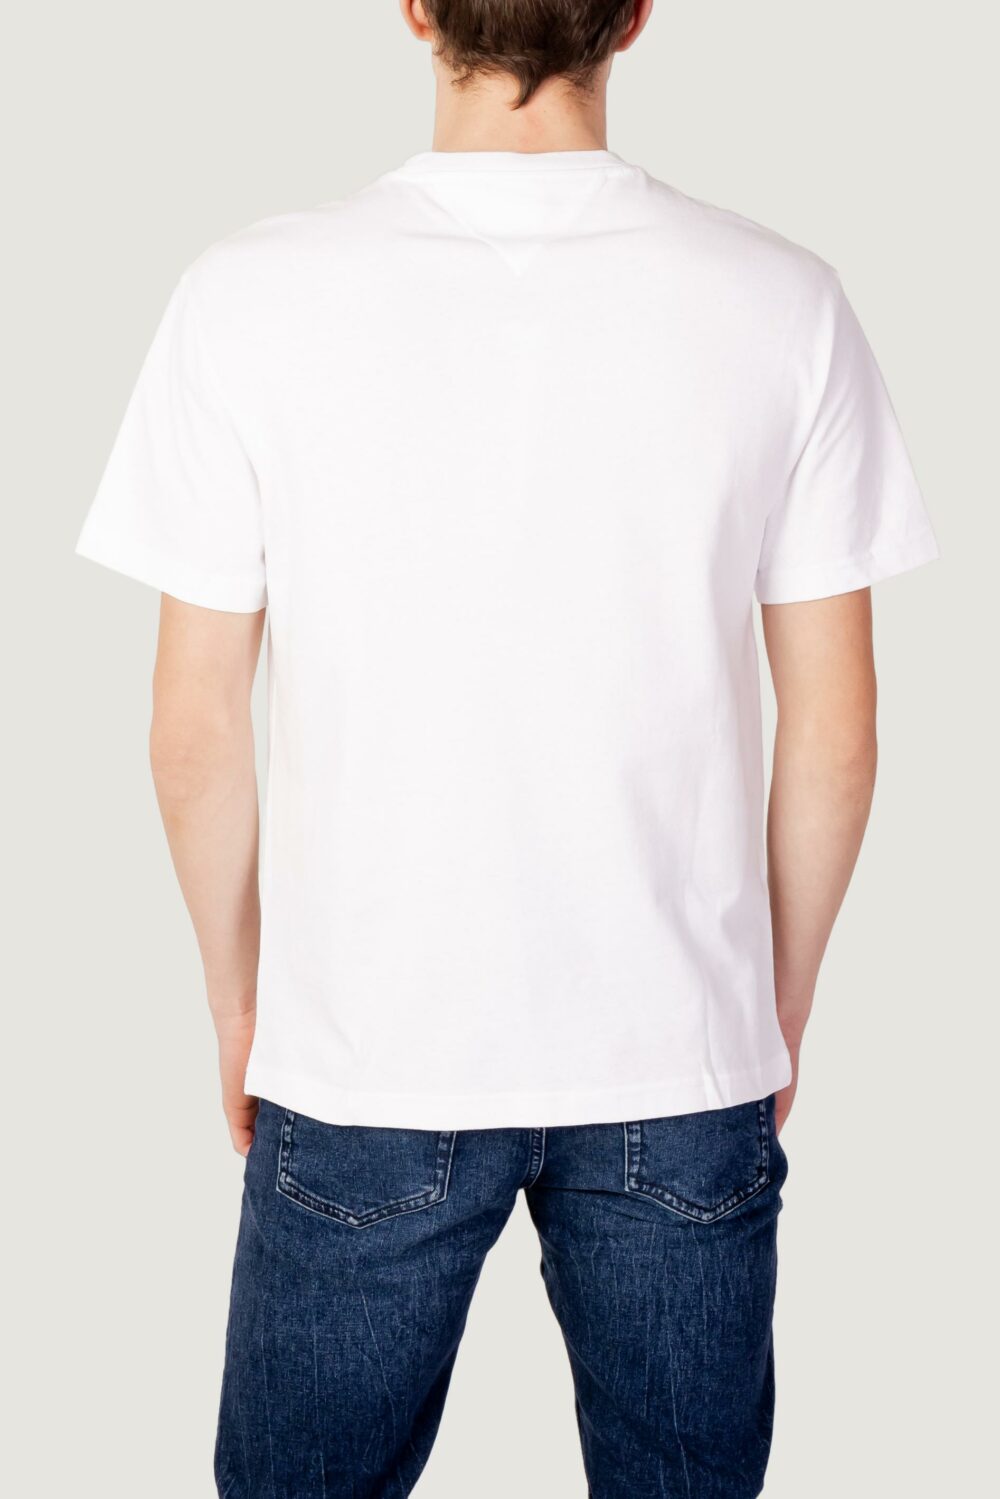 T-shirt Tommy Hilfiger Jeans TJM CLSC MODERN SPOR Bianco - Foto 4